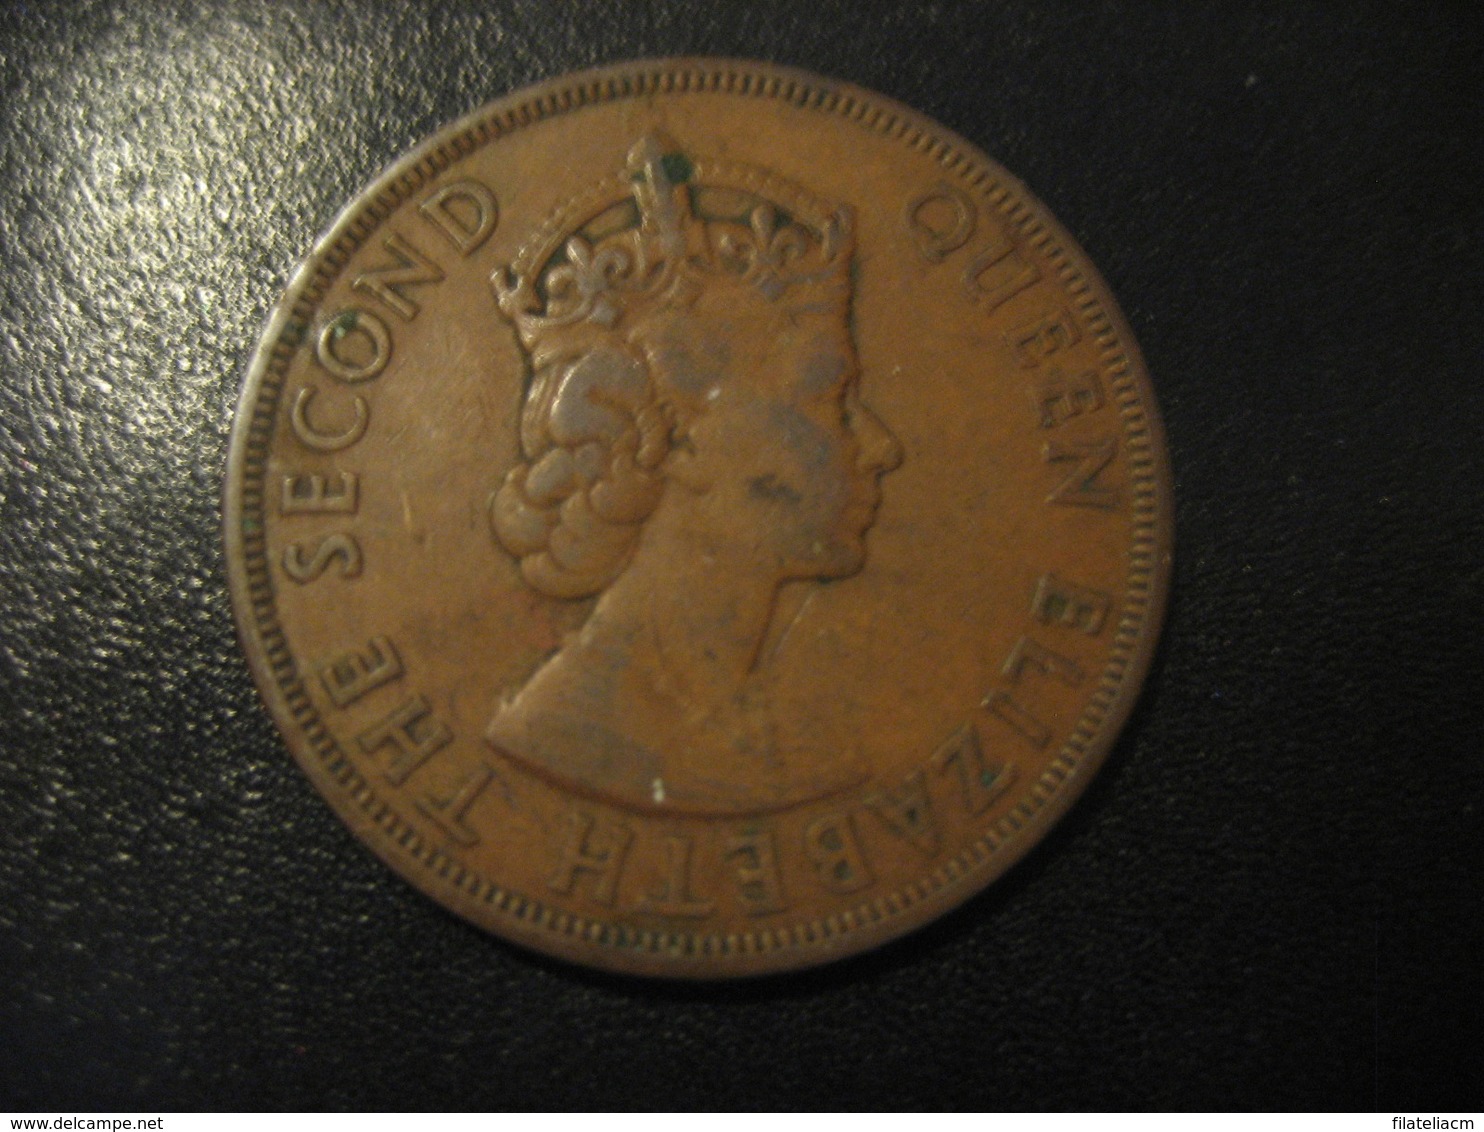 2 Cents BRITISH CARIBBEAN TERRITORIES 1955 Coin British West Indies Antillas - Antilles